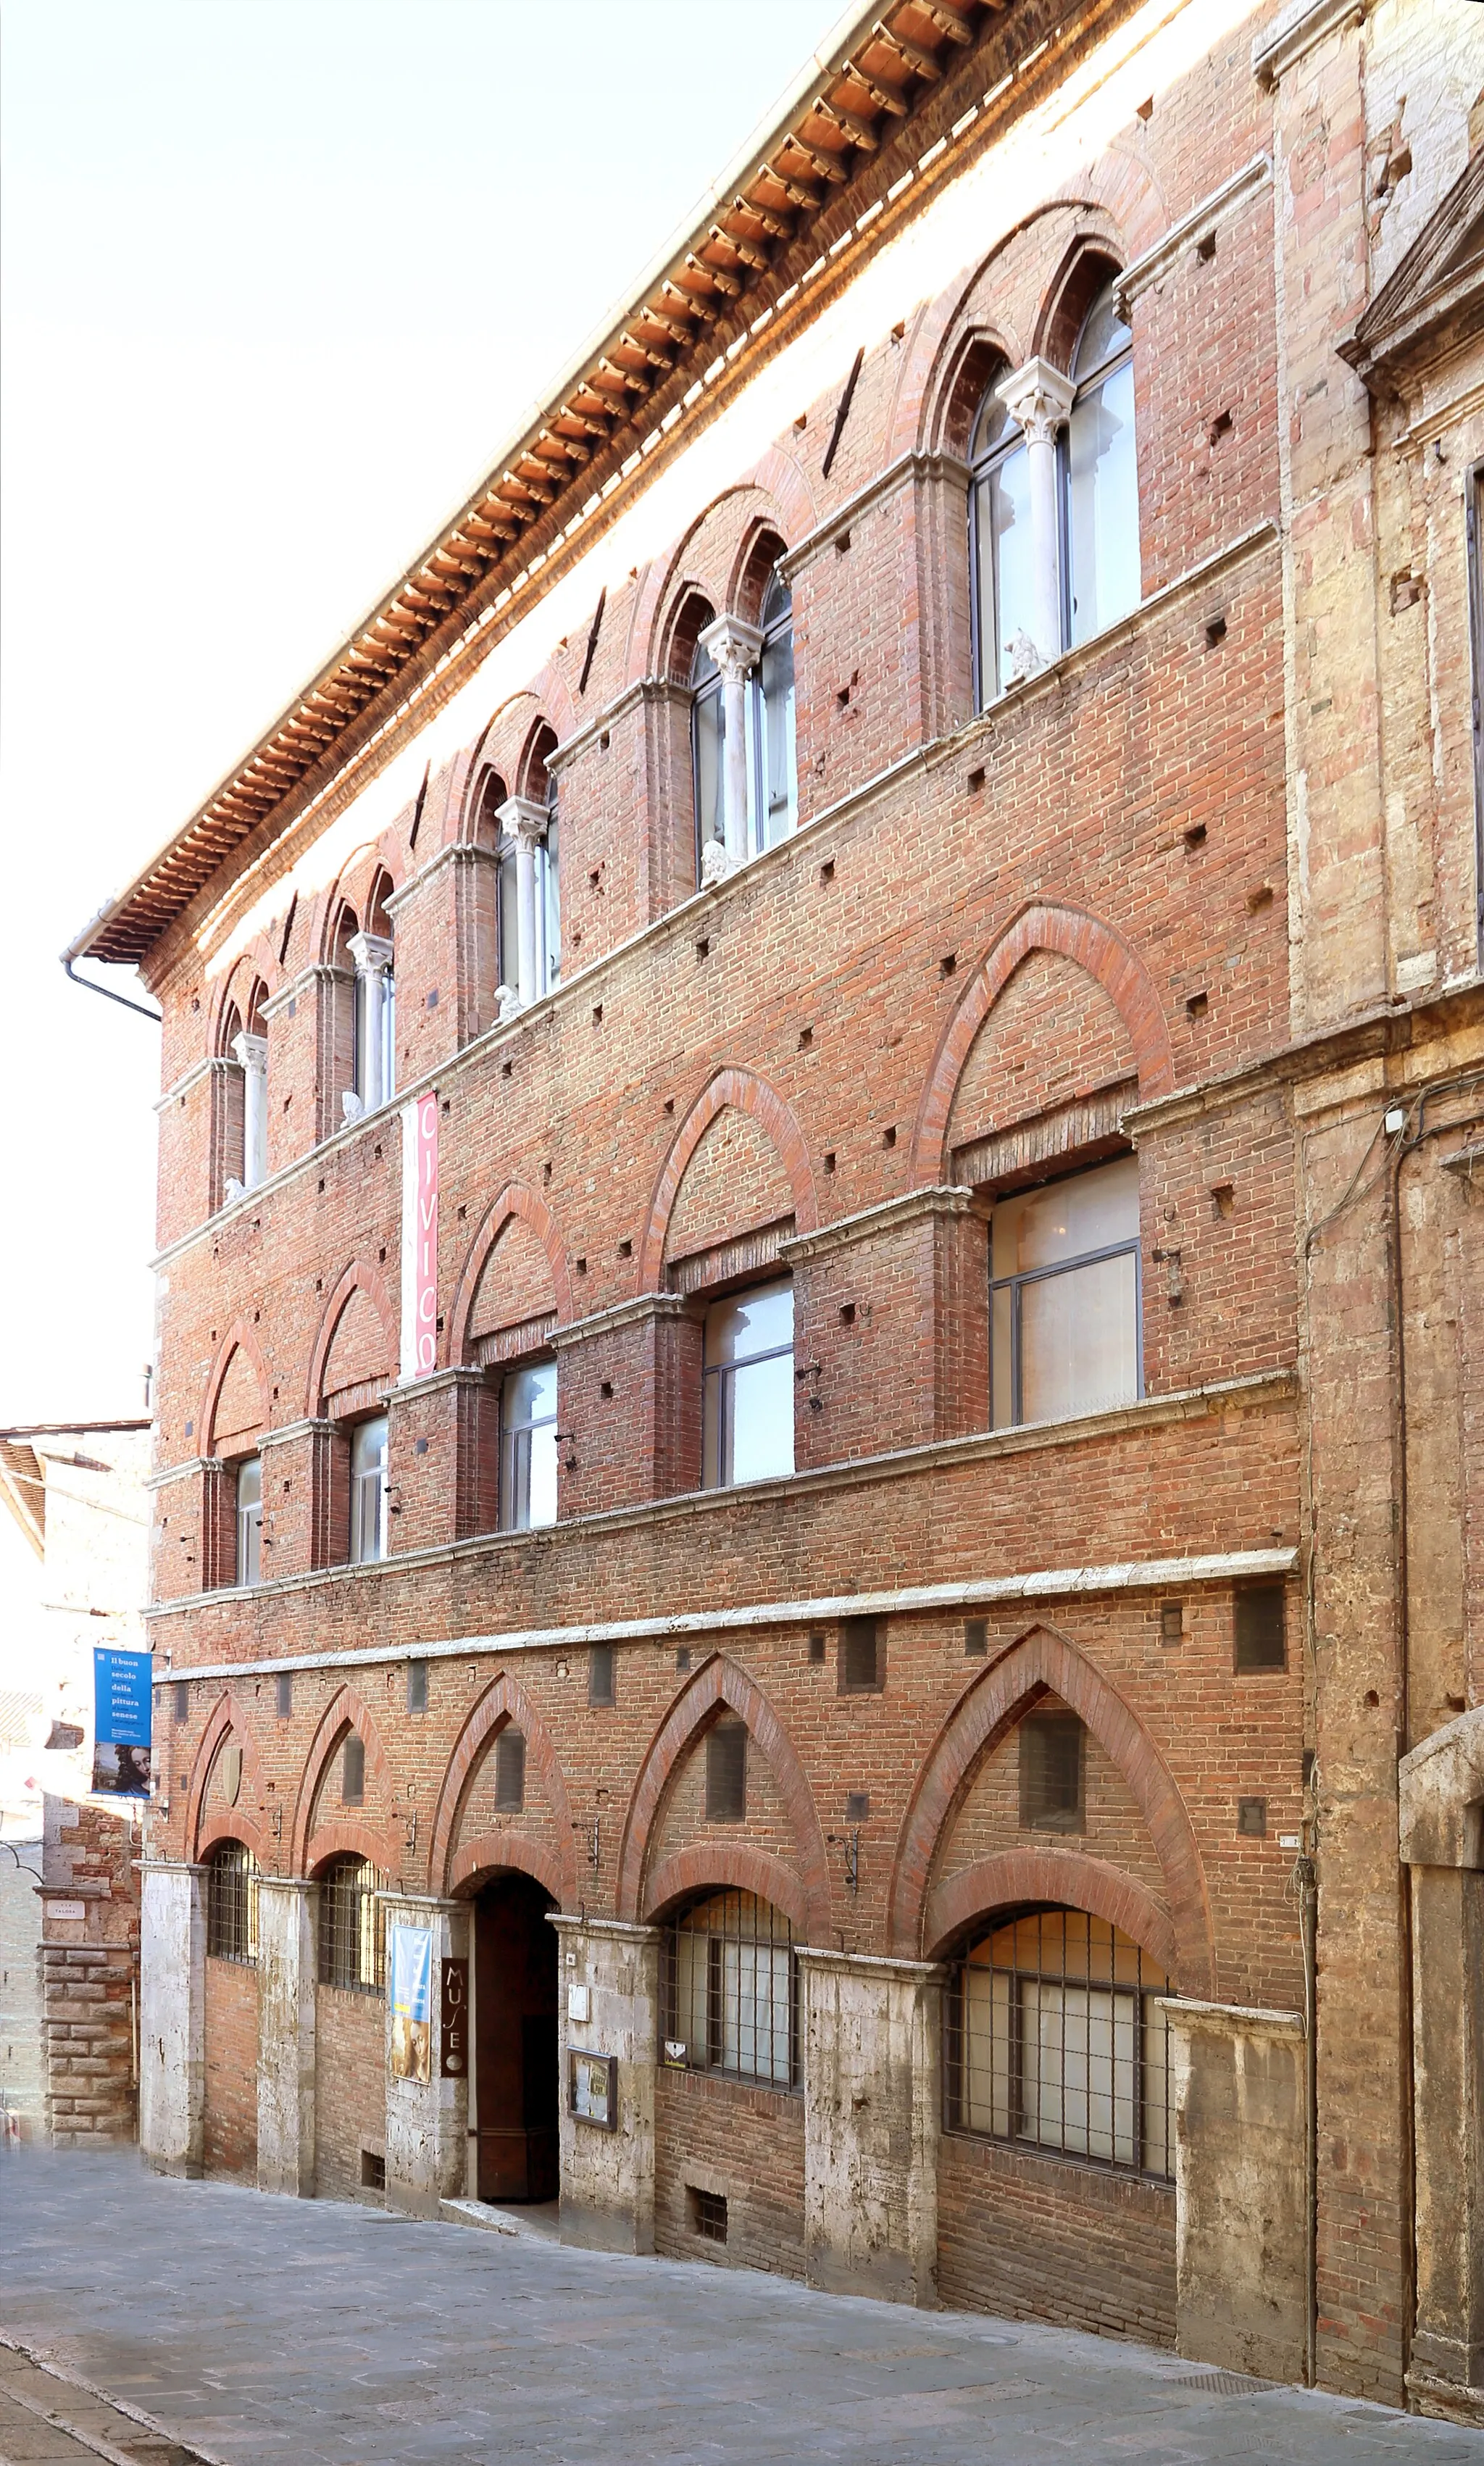 Image of Montepulciano